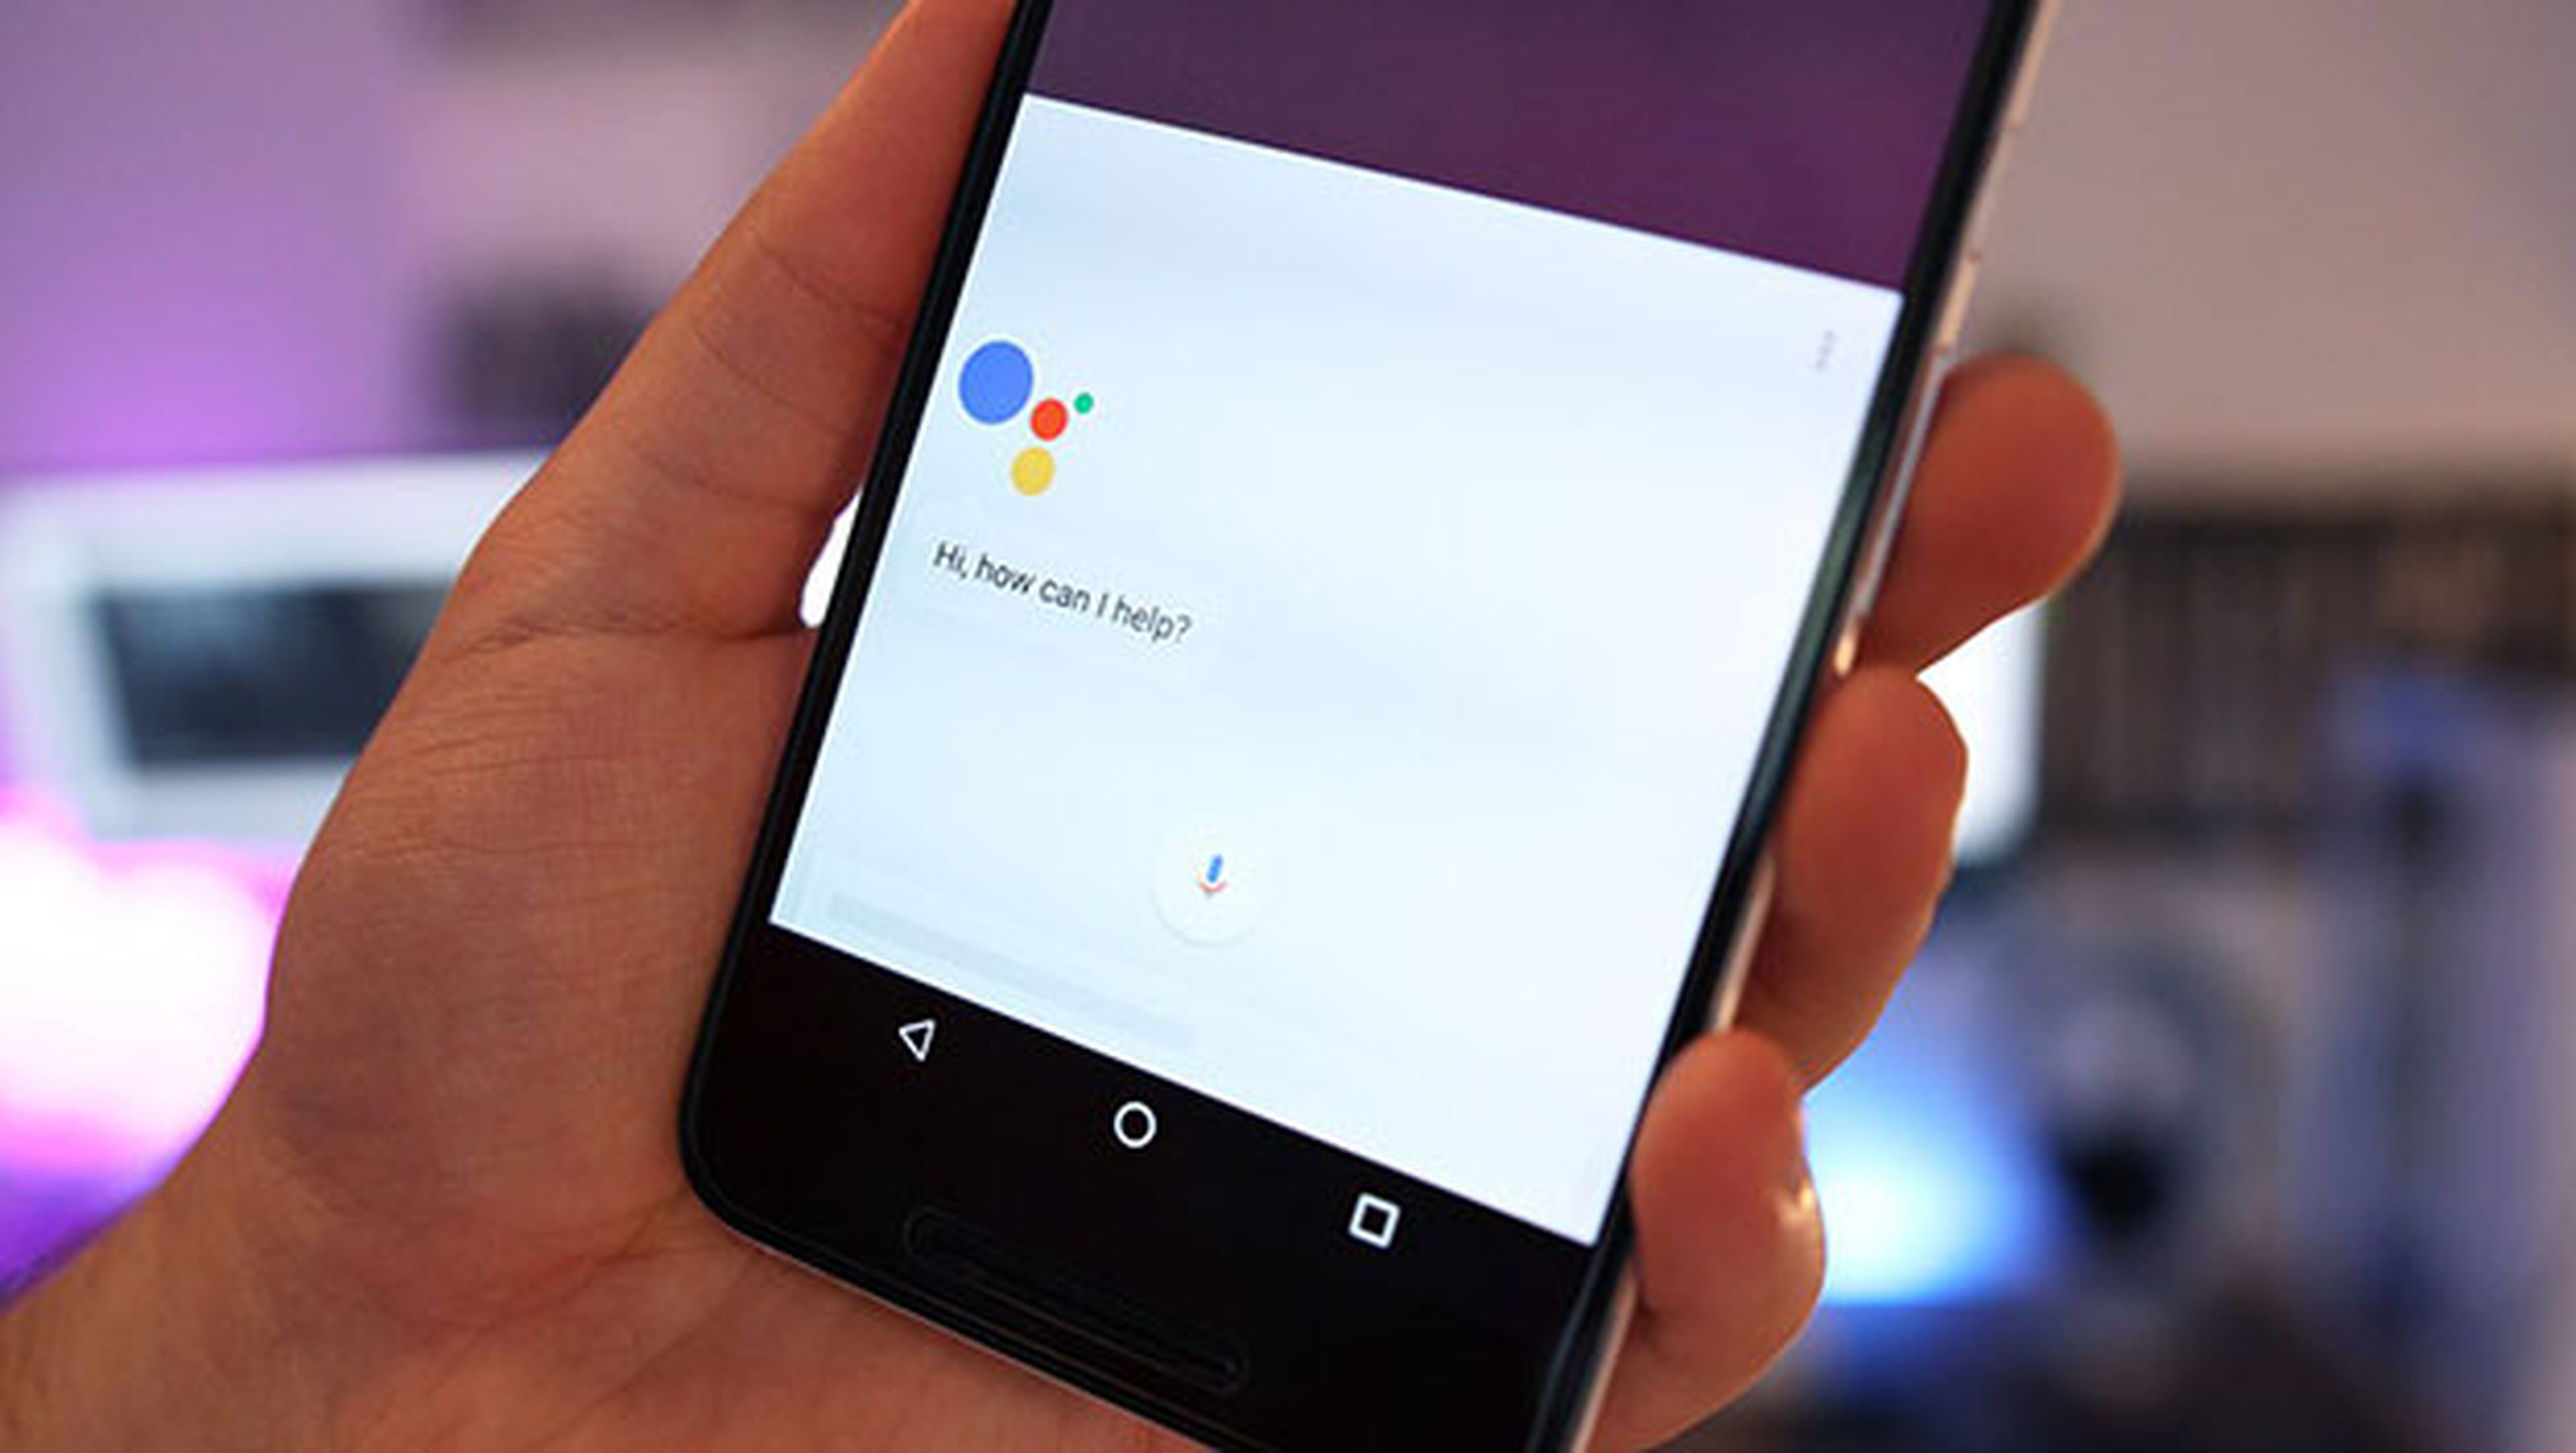 Pronto podrás usar ‘Hey Google’ para llamar a Google Assistant en tu móvil Android